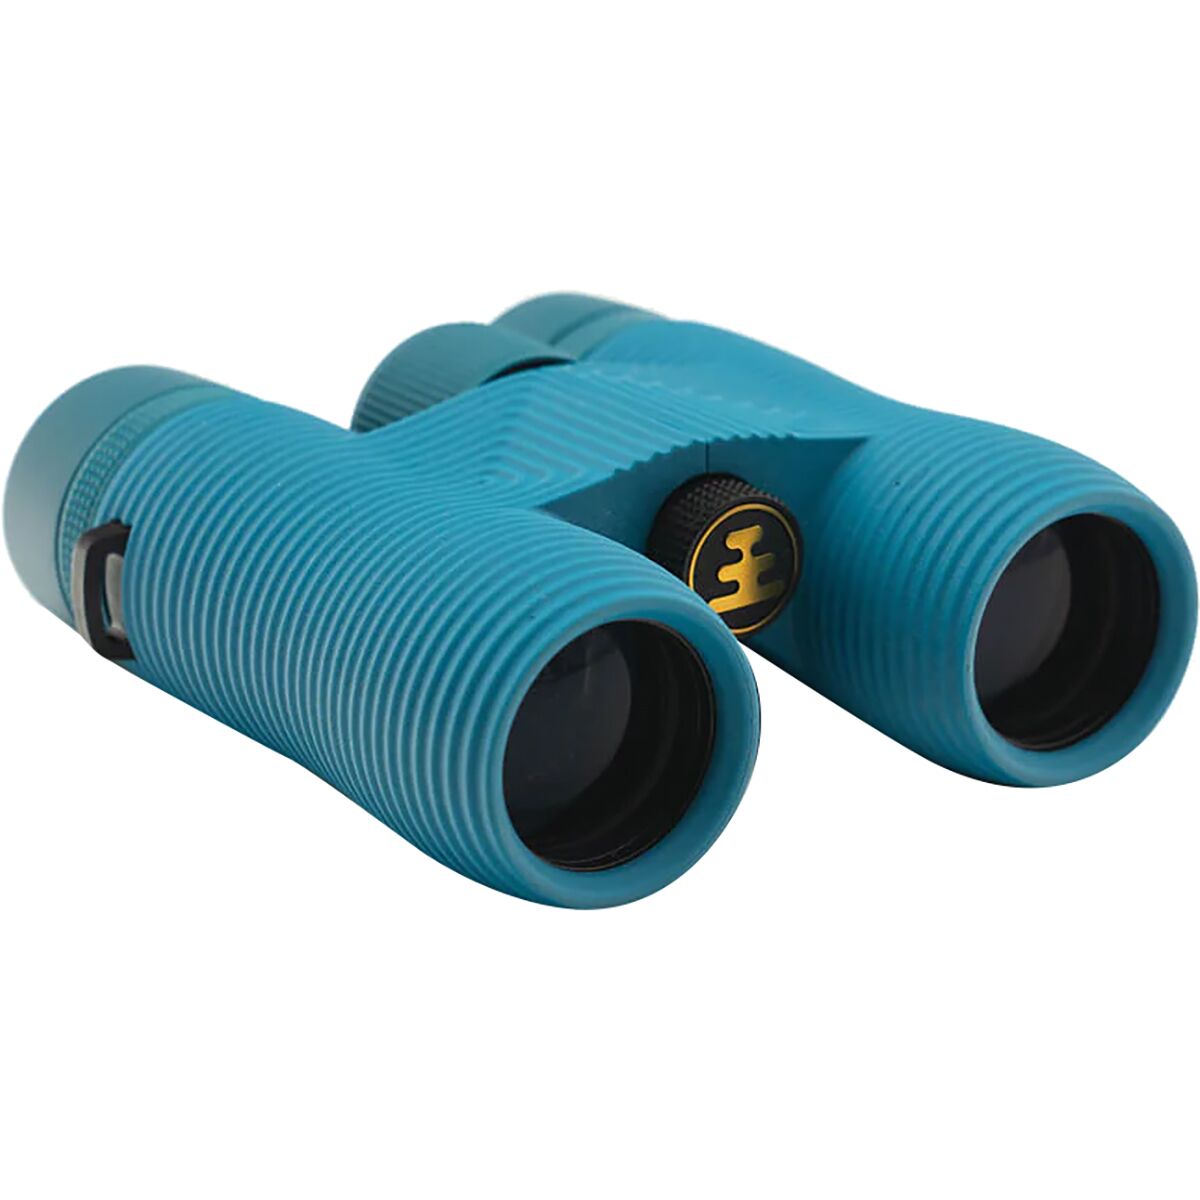 Nocs Provisions Field Issue 32 Caliber Binoculars - 8x32